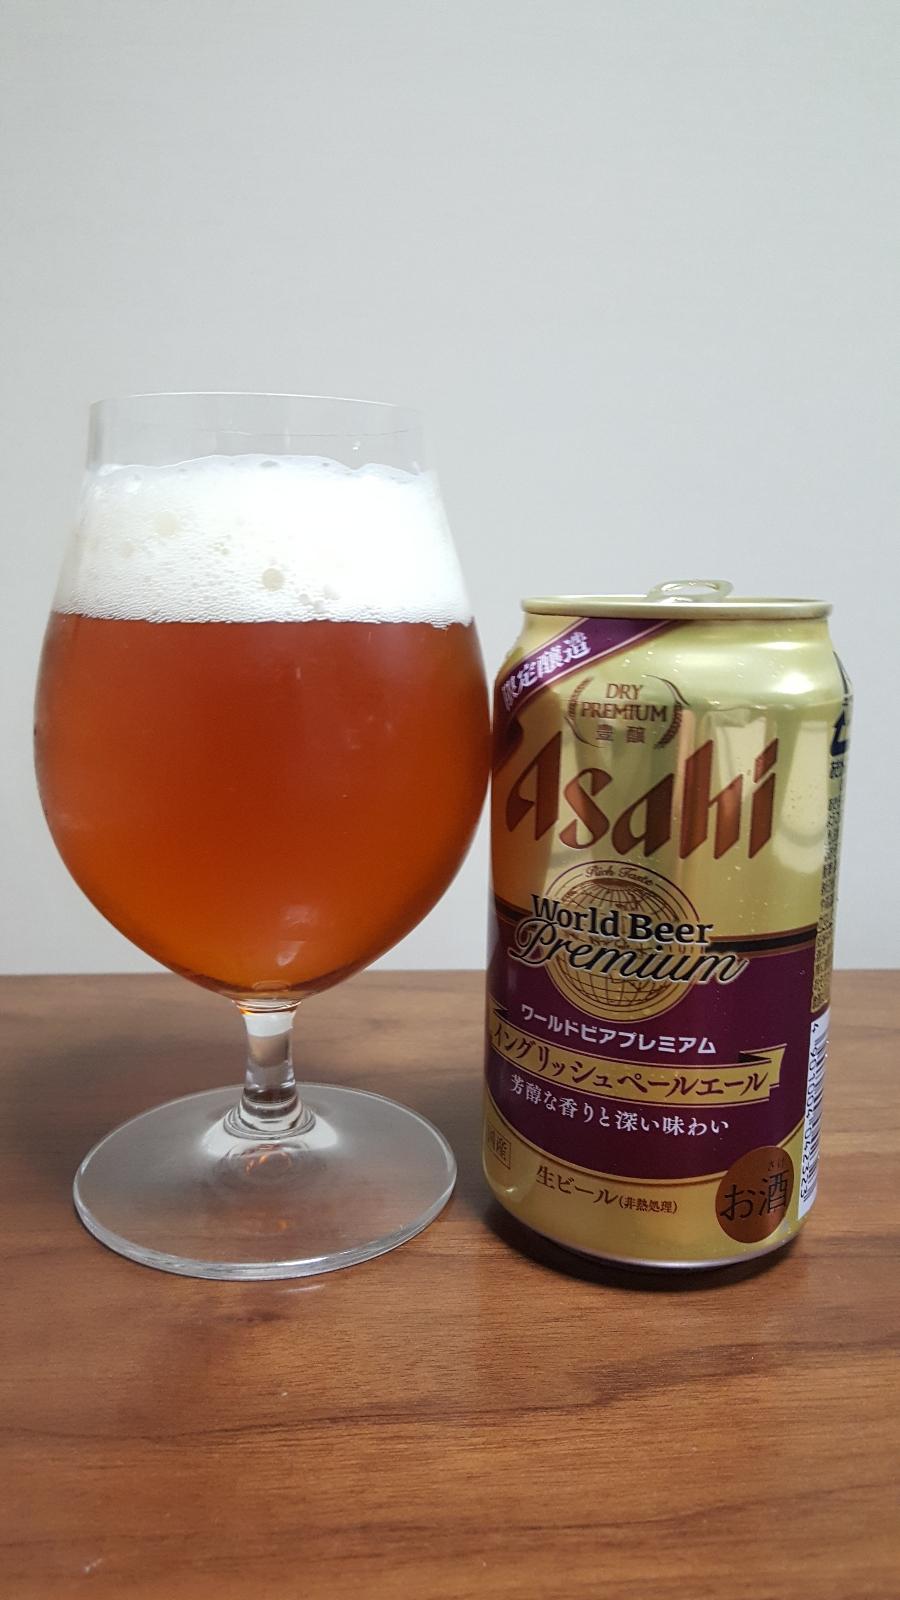 Asahi World Beer Premium: English Pale Ale